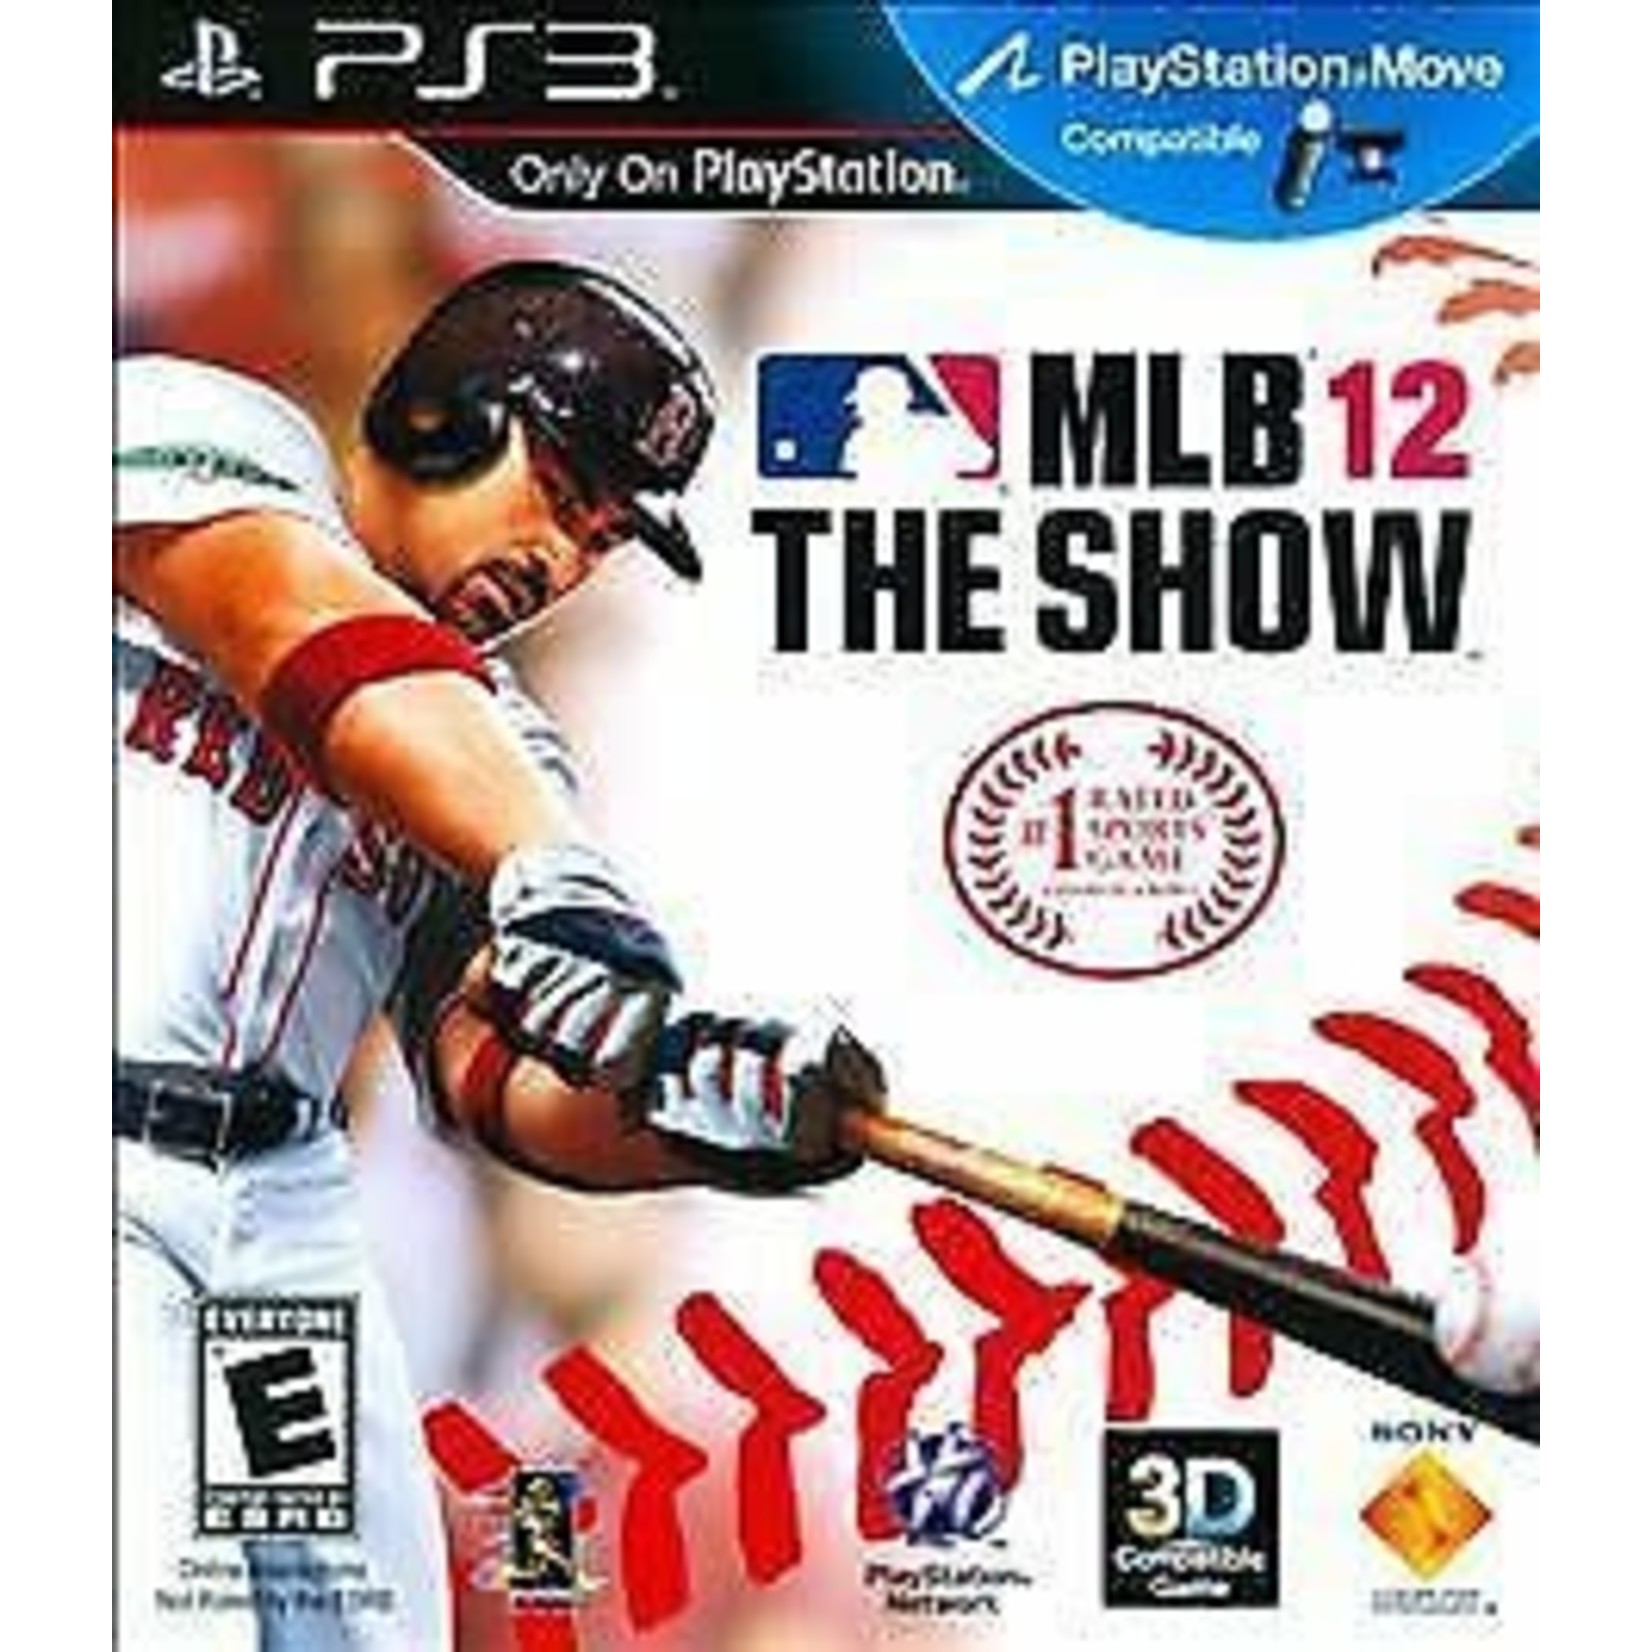 PS3U-MLB 12: THE SHOW